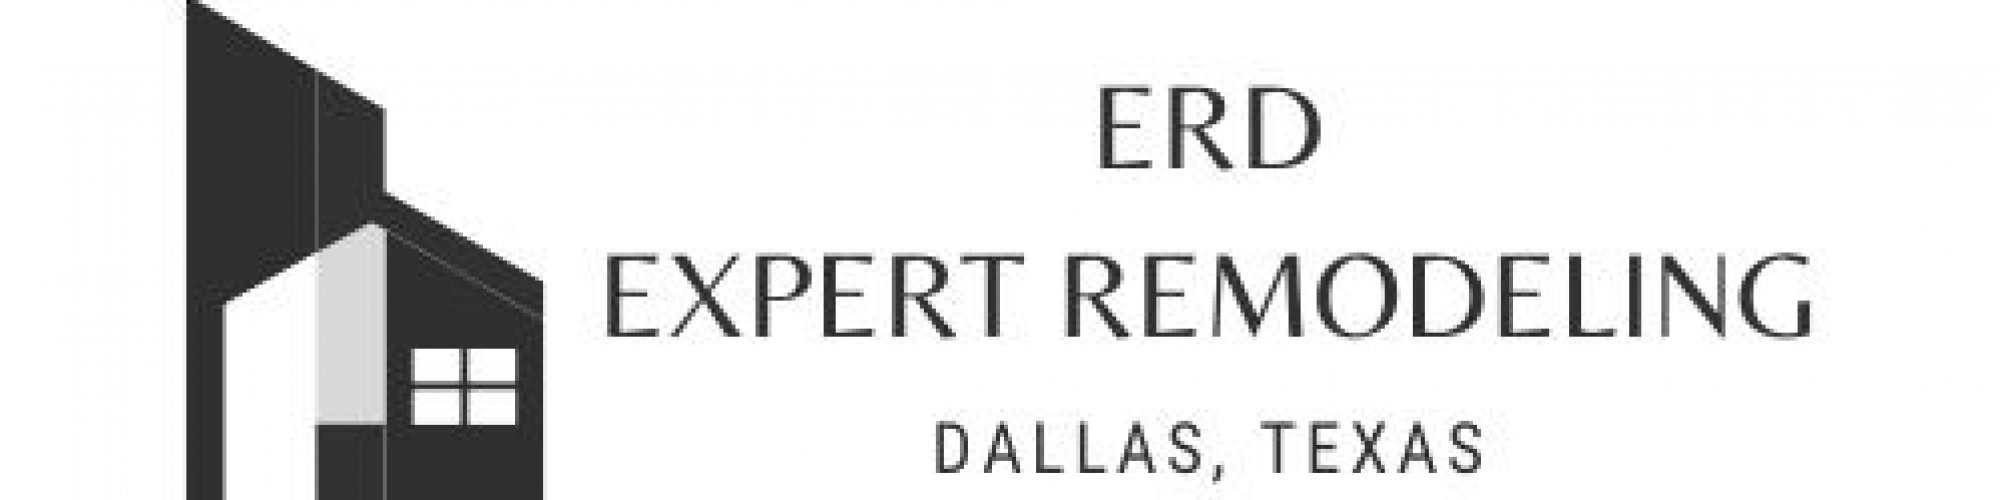 Expert Remodeling Dallas